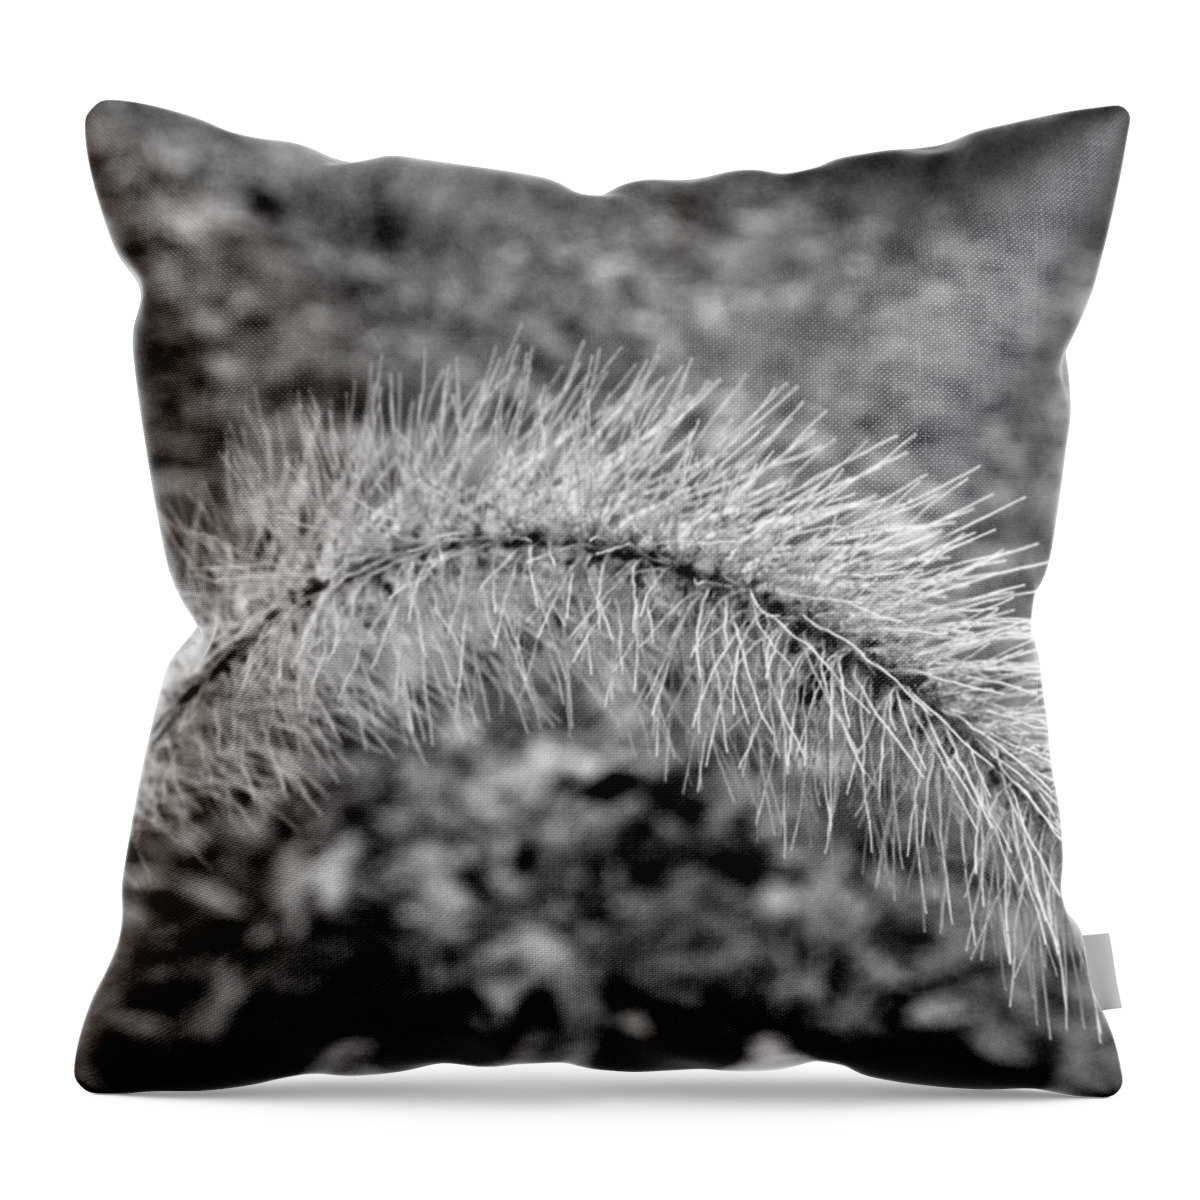 Fuzzy Throw Pillow featuring the photograph Burst In The Woods by Kim Galluzzo Wozniak